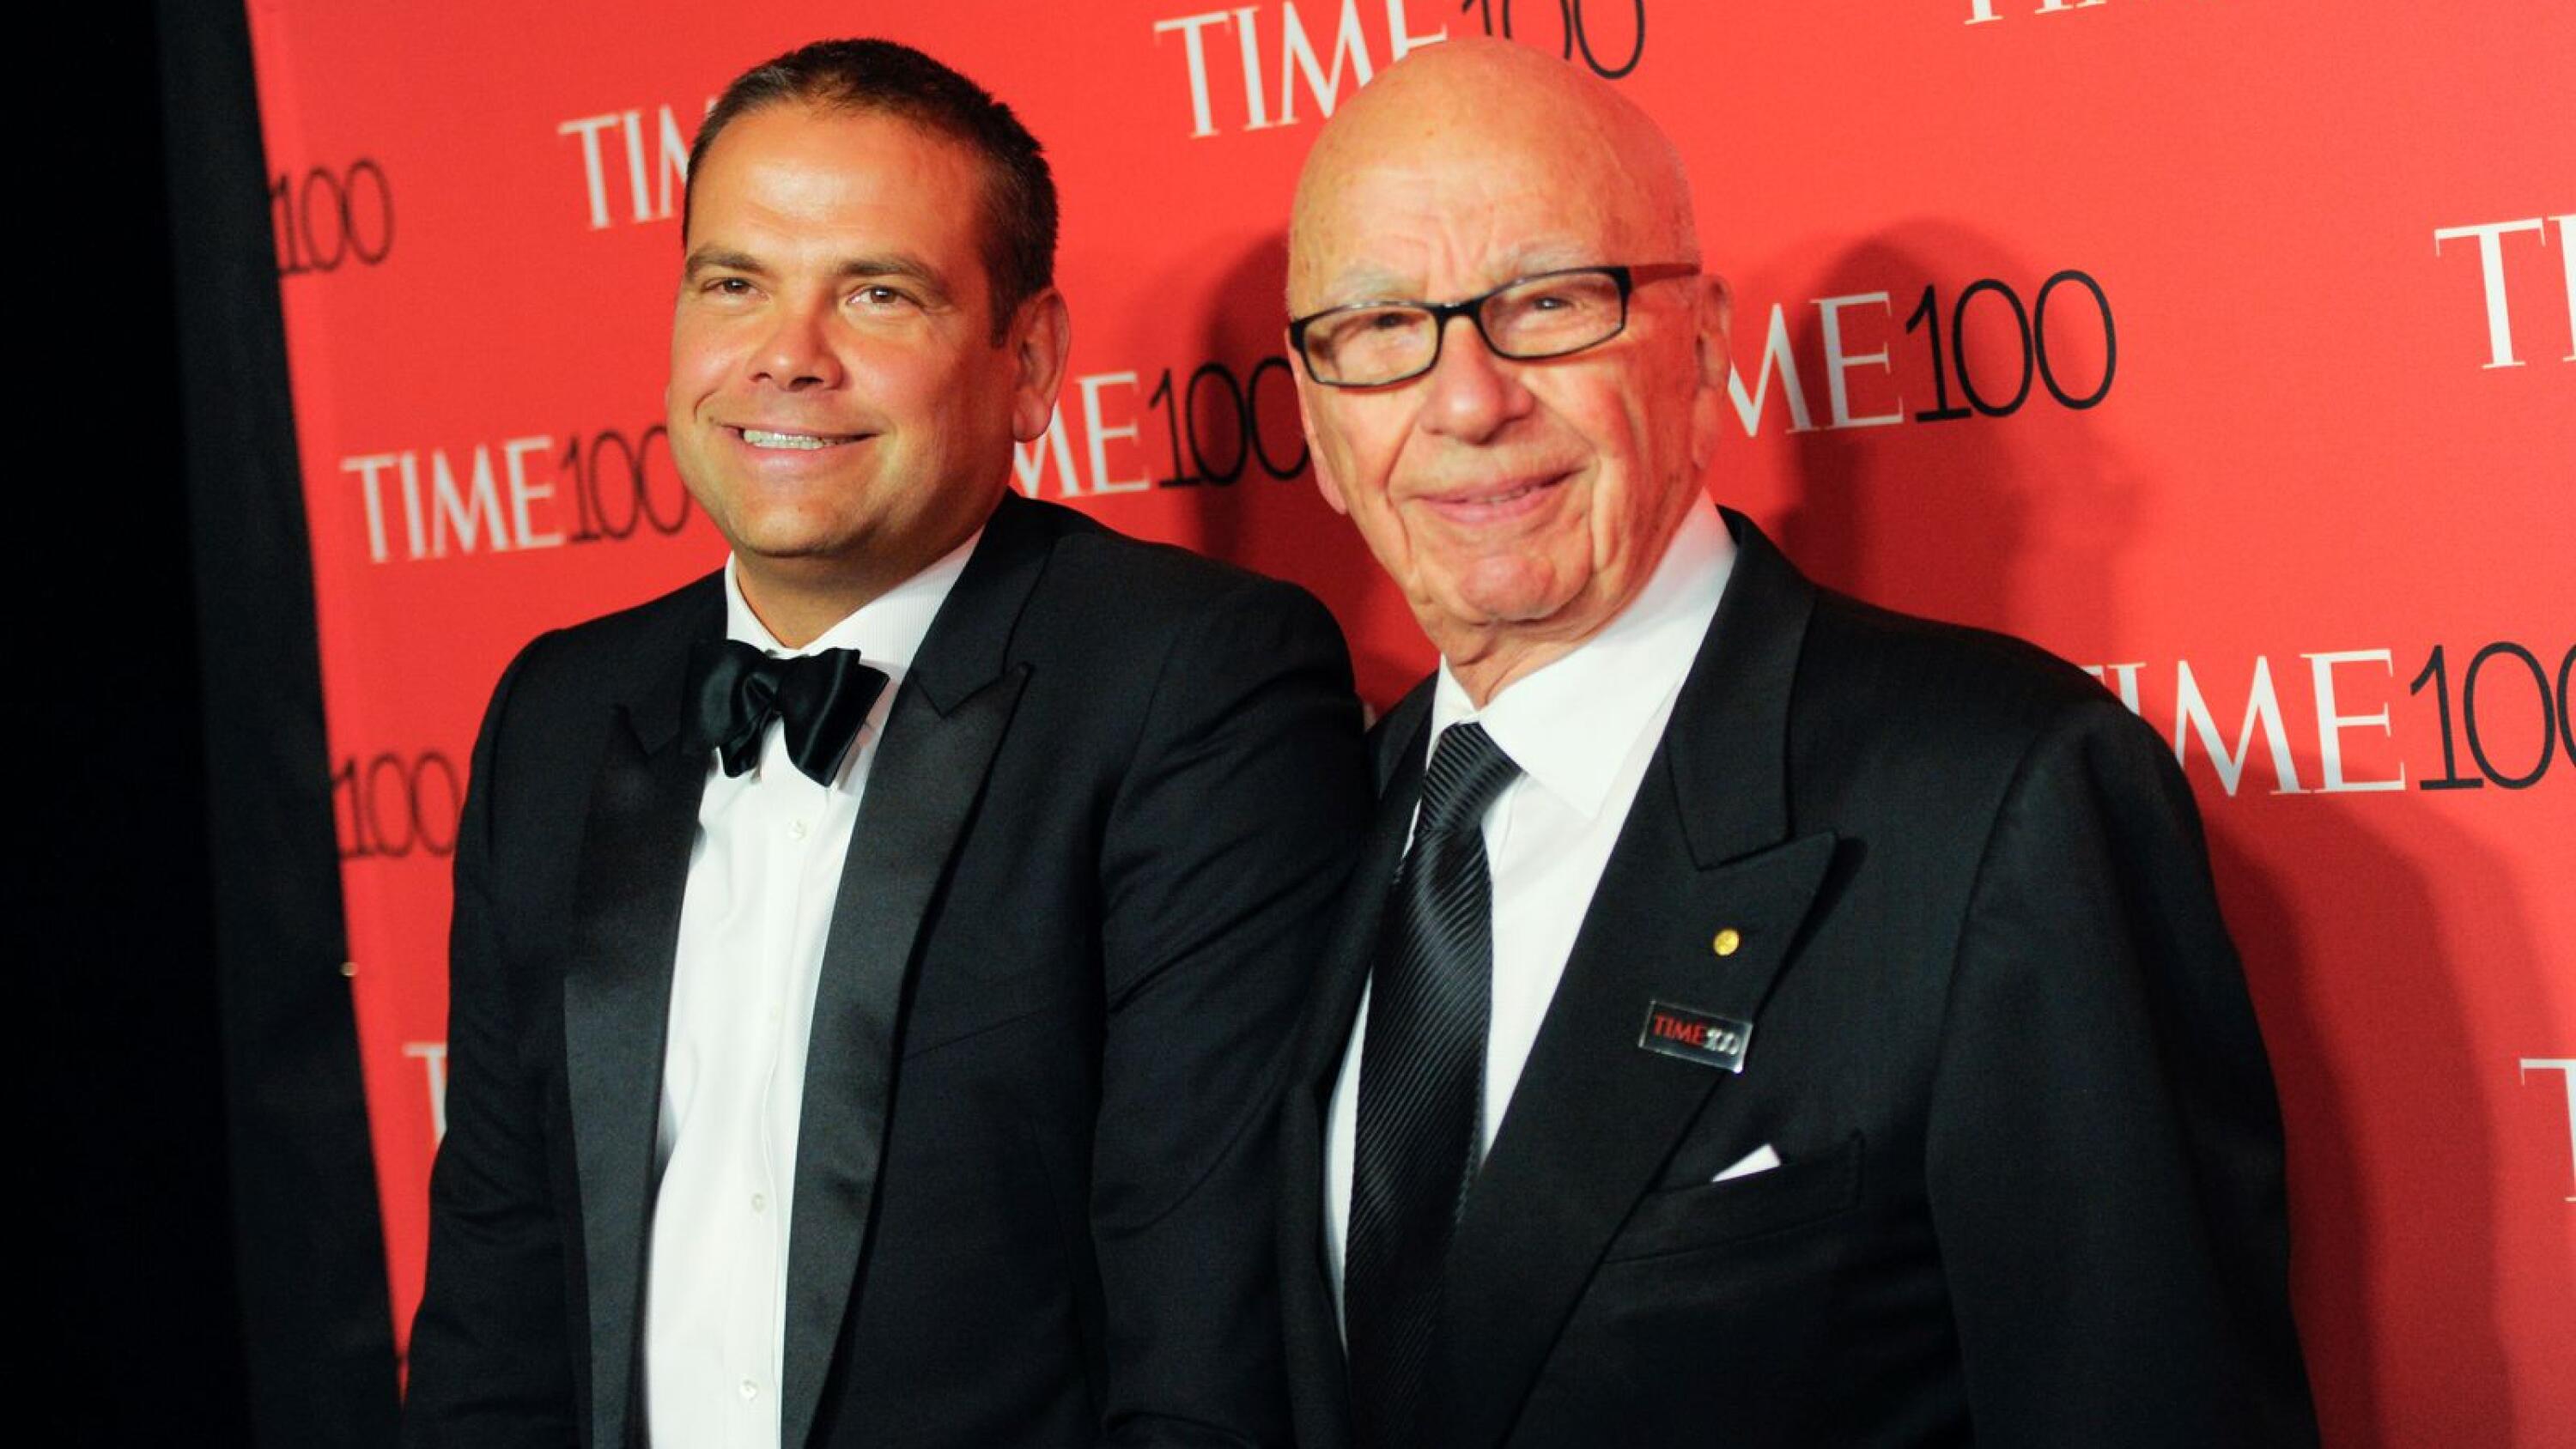 Rupert Murdoch hands control of Fox media empire to son Lachlan Murdoch